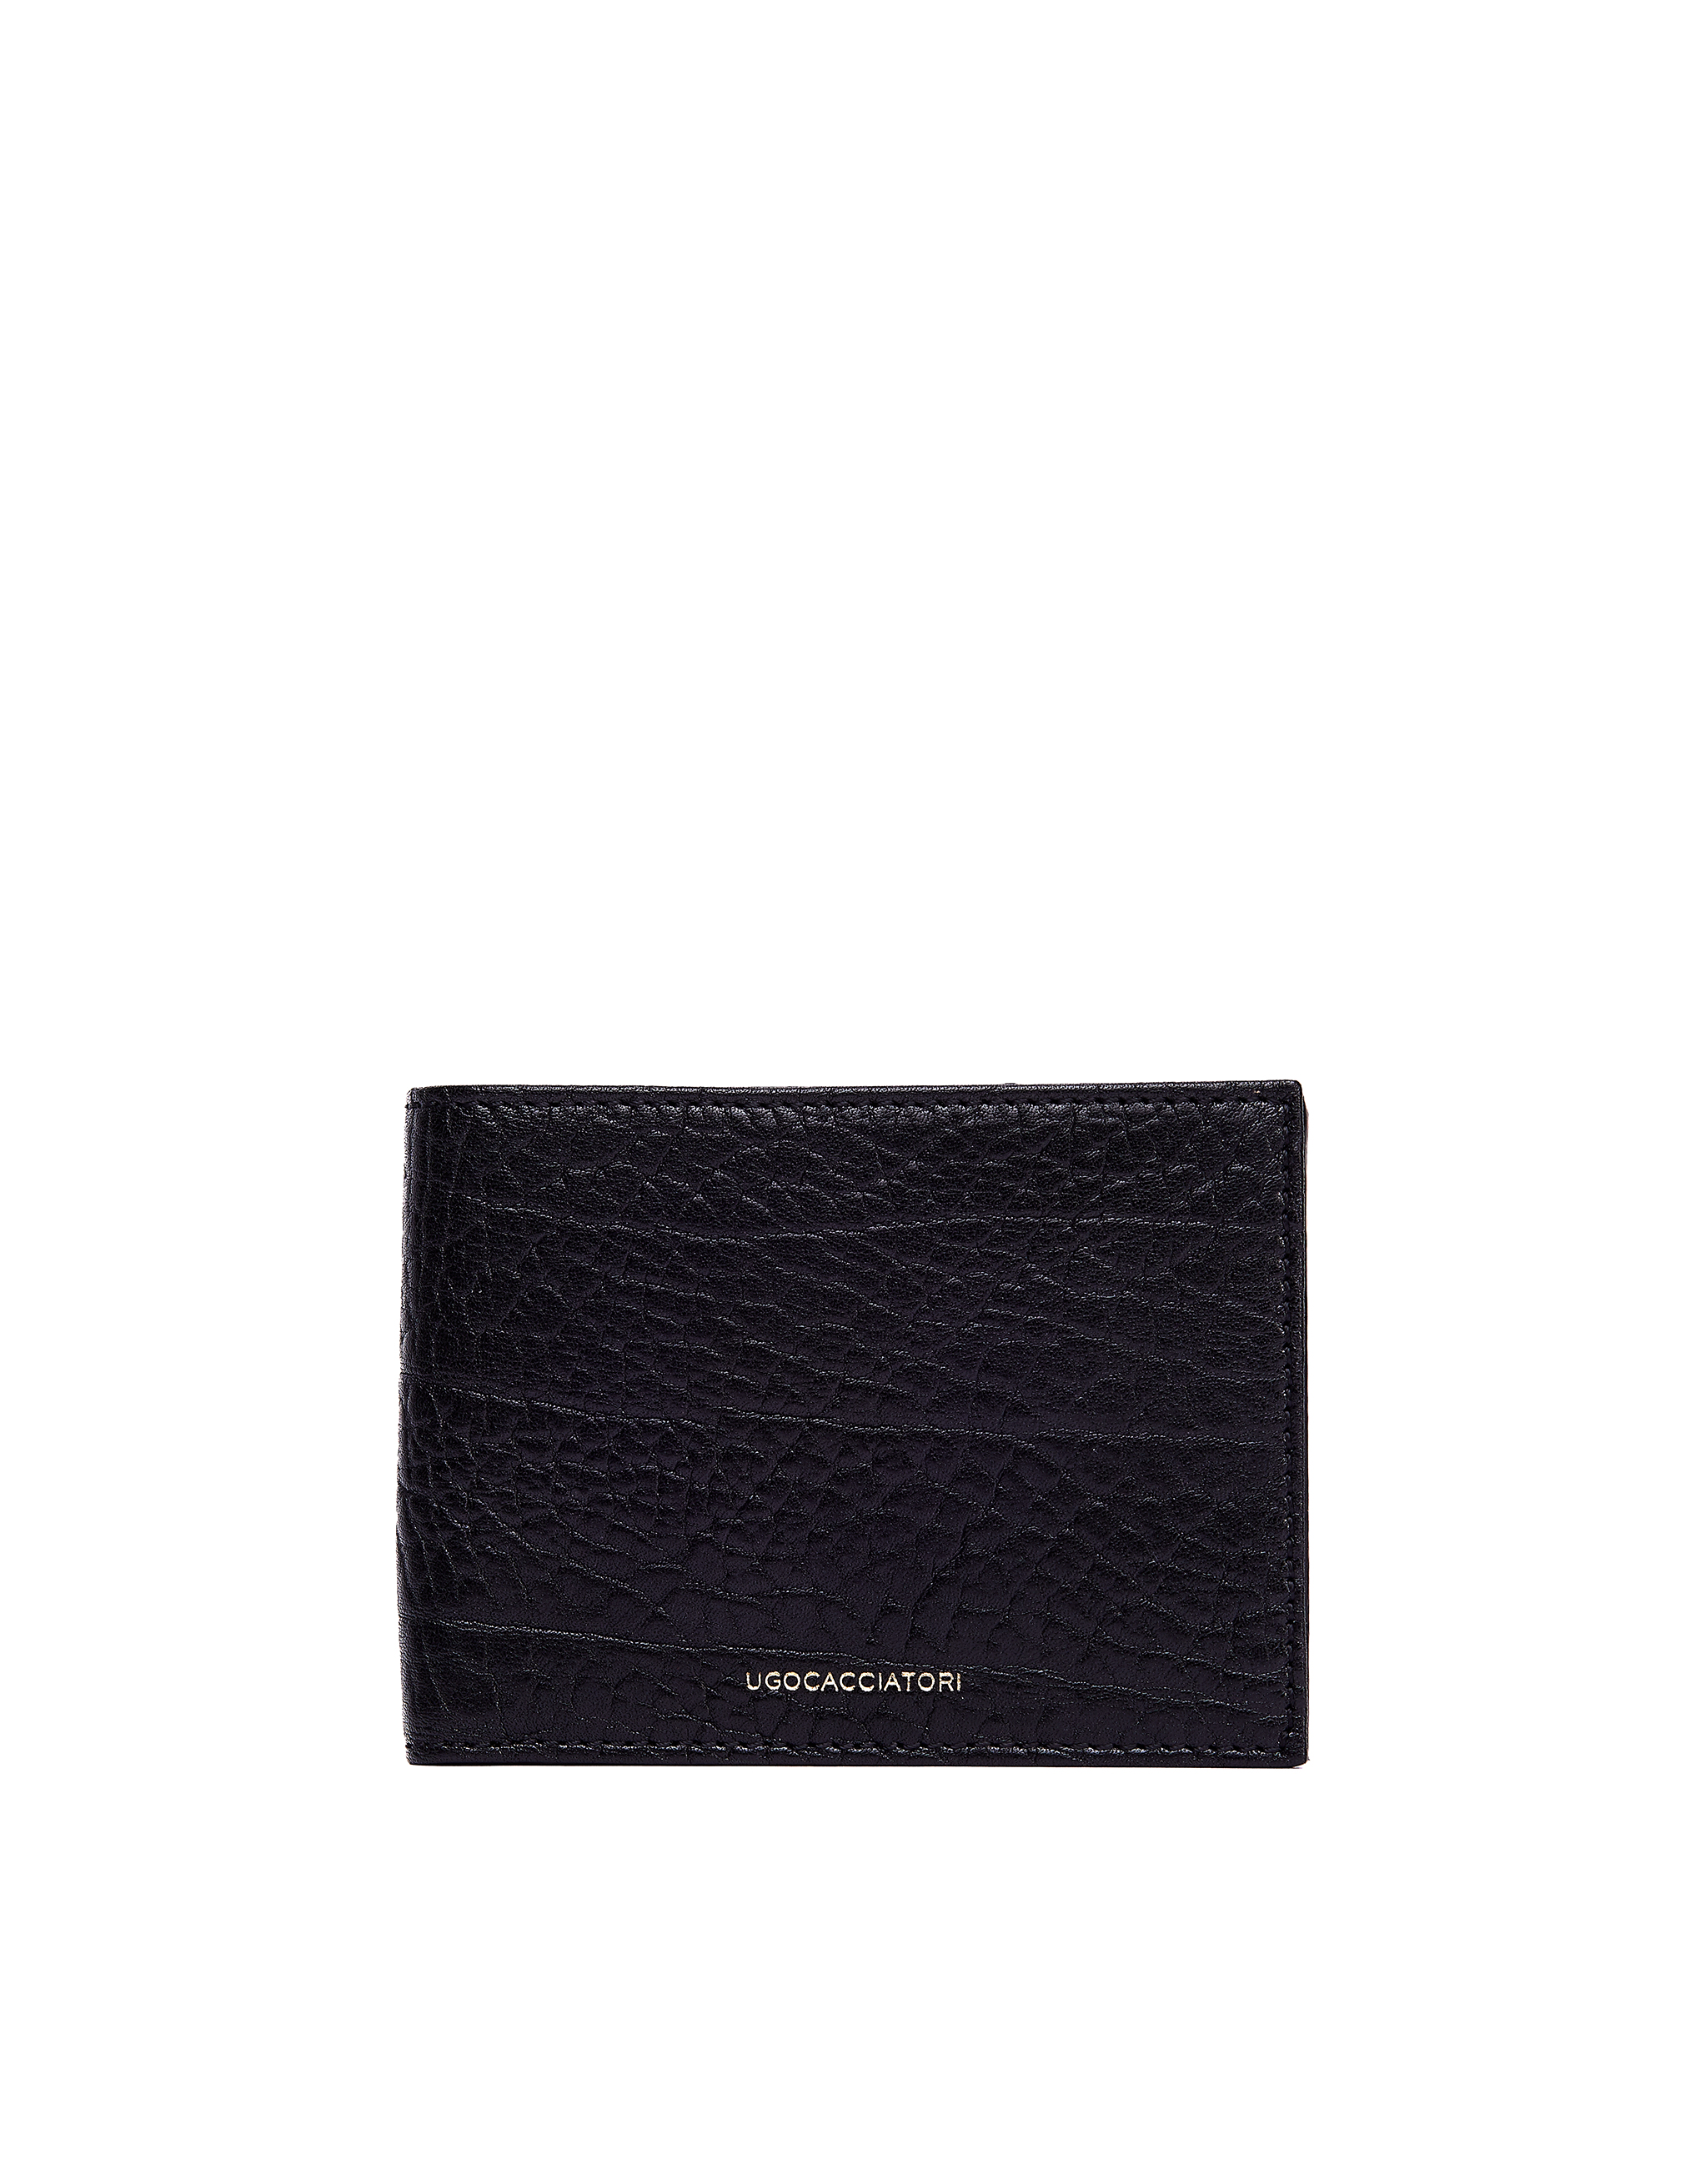 Черный кожаный кошелек Pocket Ugo Cacciatori WL141/VRN, размер One Size WL141/VRN - фото 1